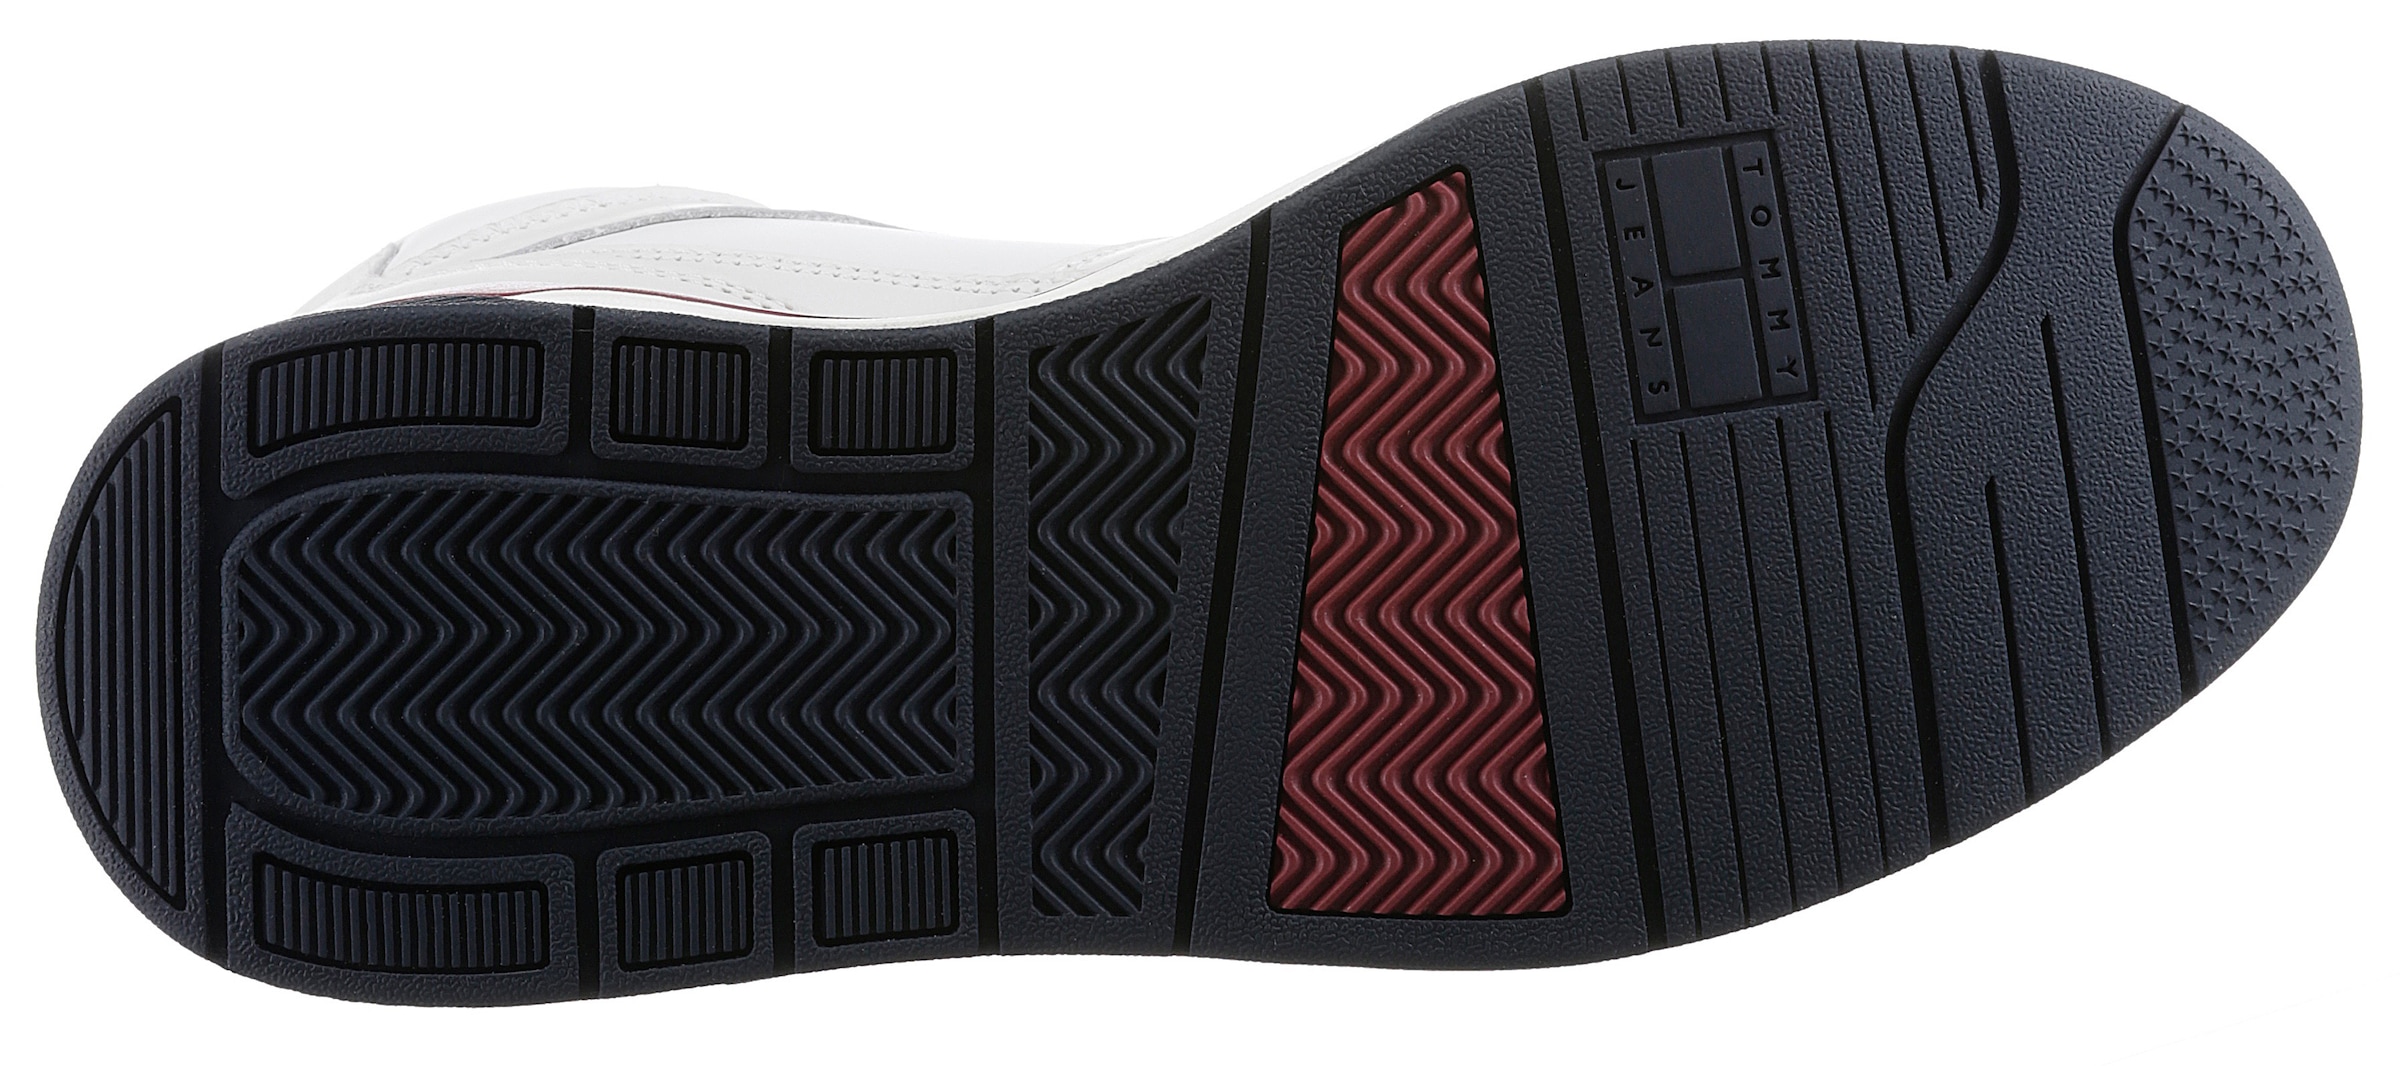 Tommy Jeans Sneaker »TJM BASKET MID TOP«, mit Details in Tommy Farben